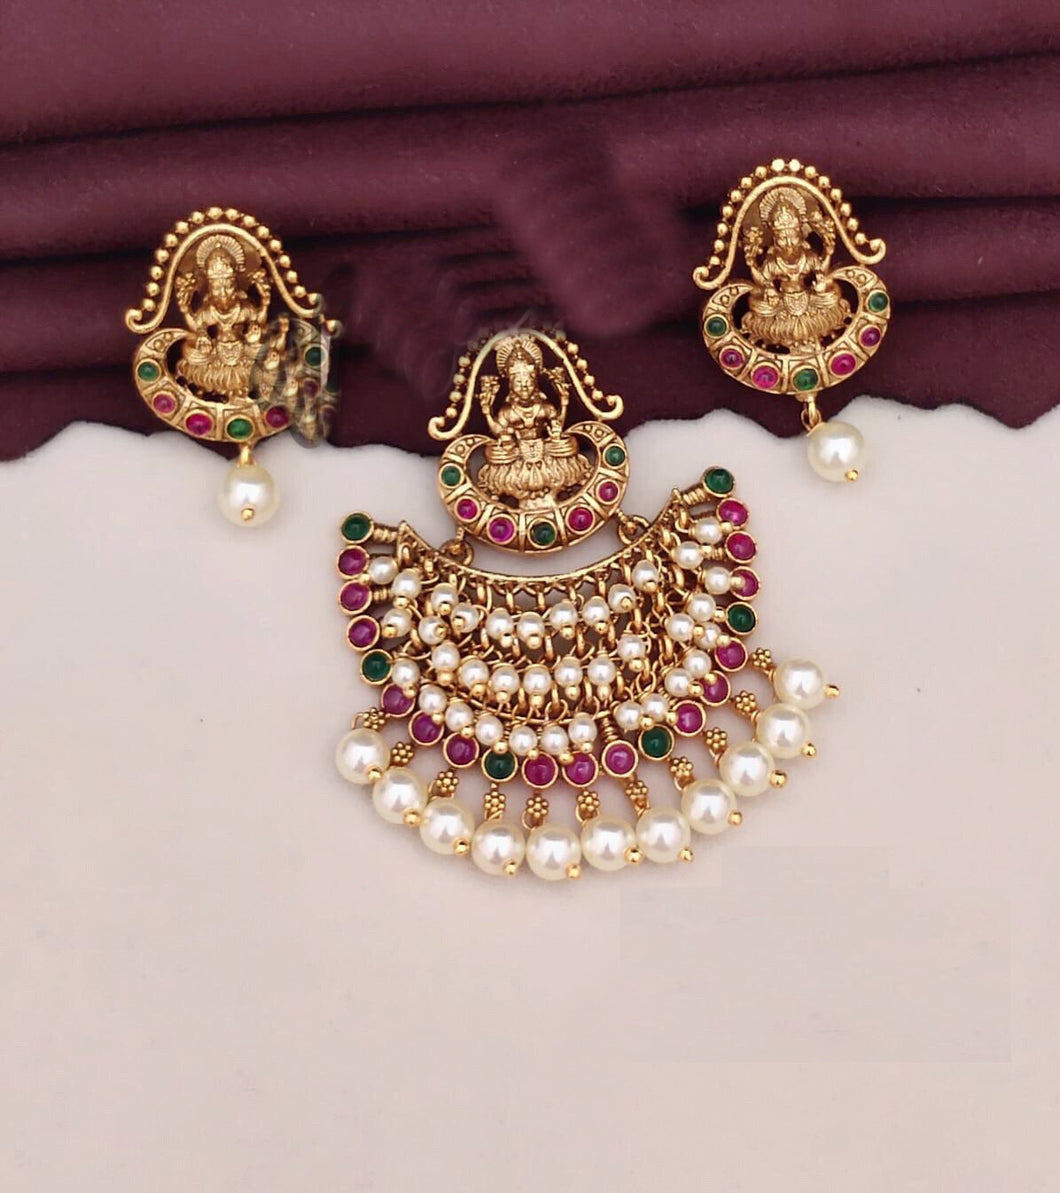 Multicolor Matte finish copper lakshmi ji temple pendant necklace set with pearls